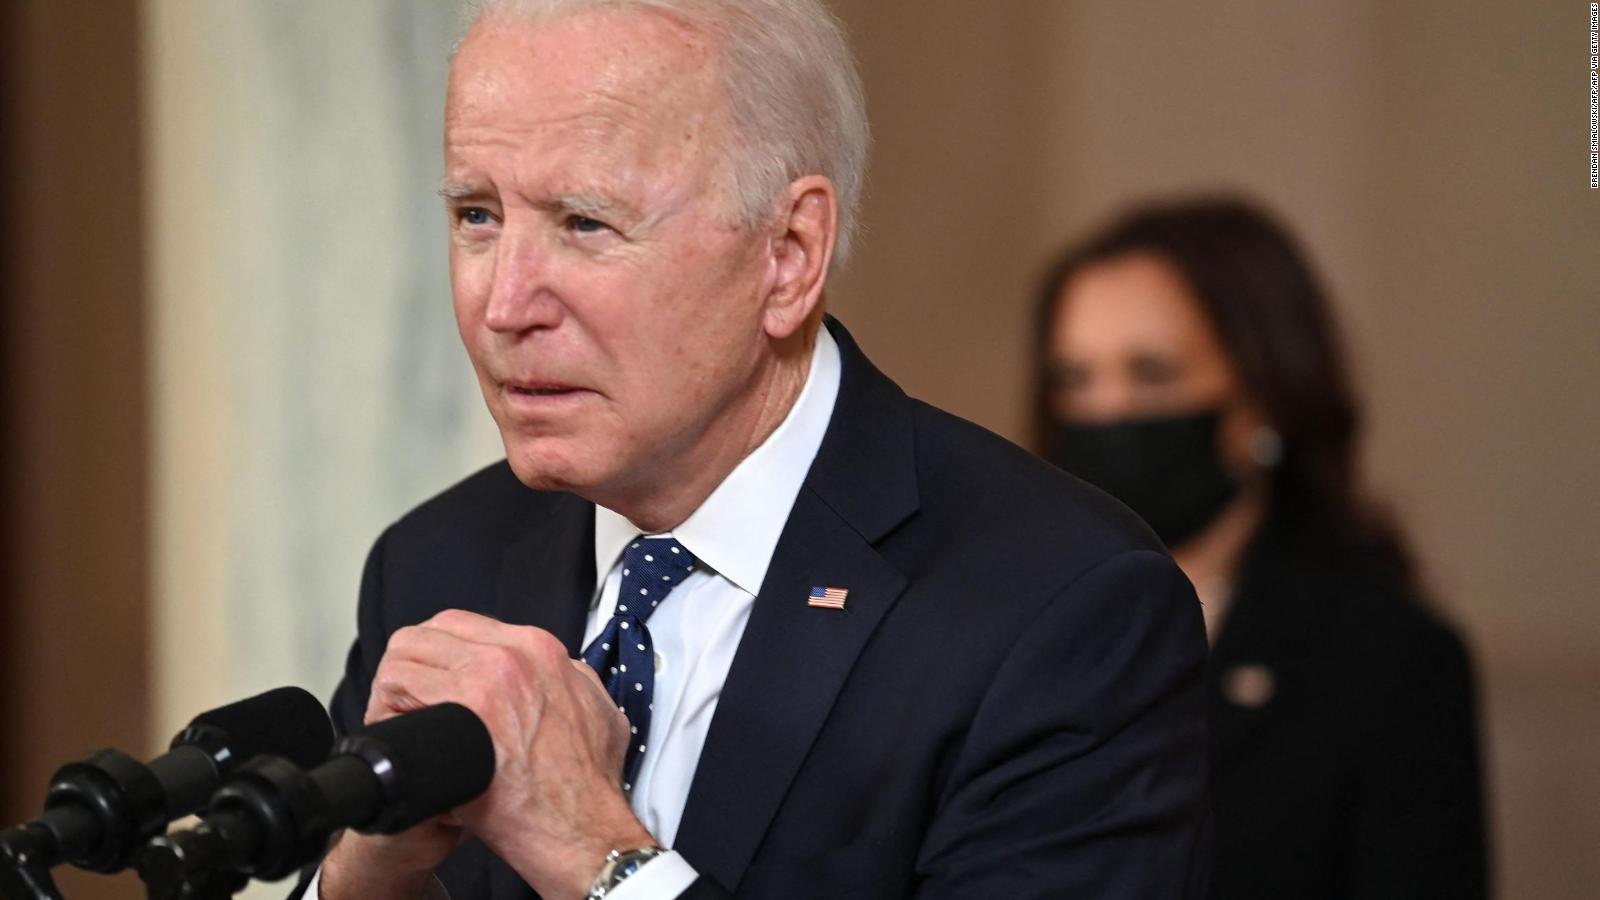 Joe Biden delivered the Chauvin verdict speech America needed (opinion